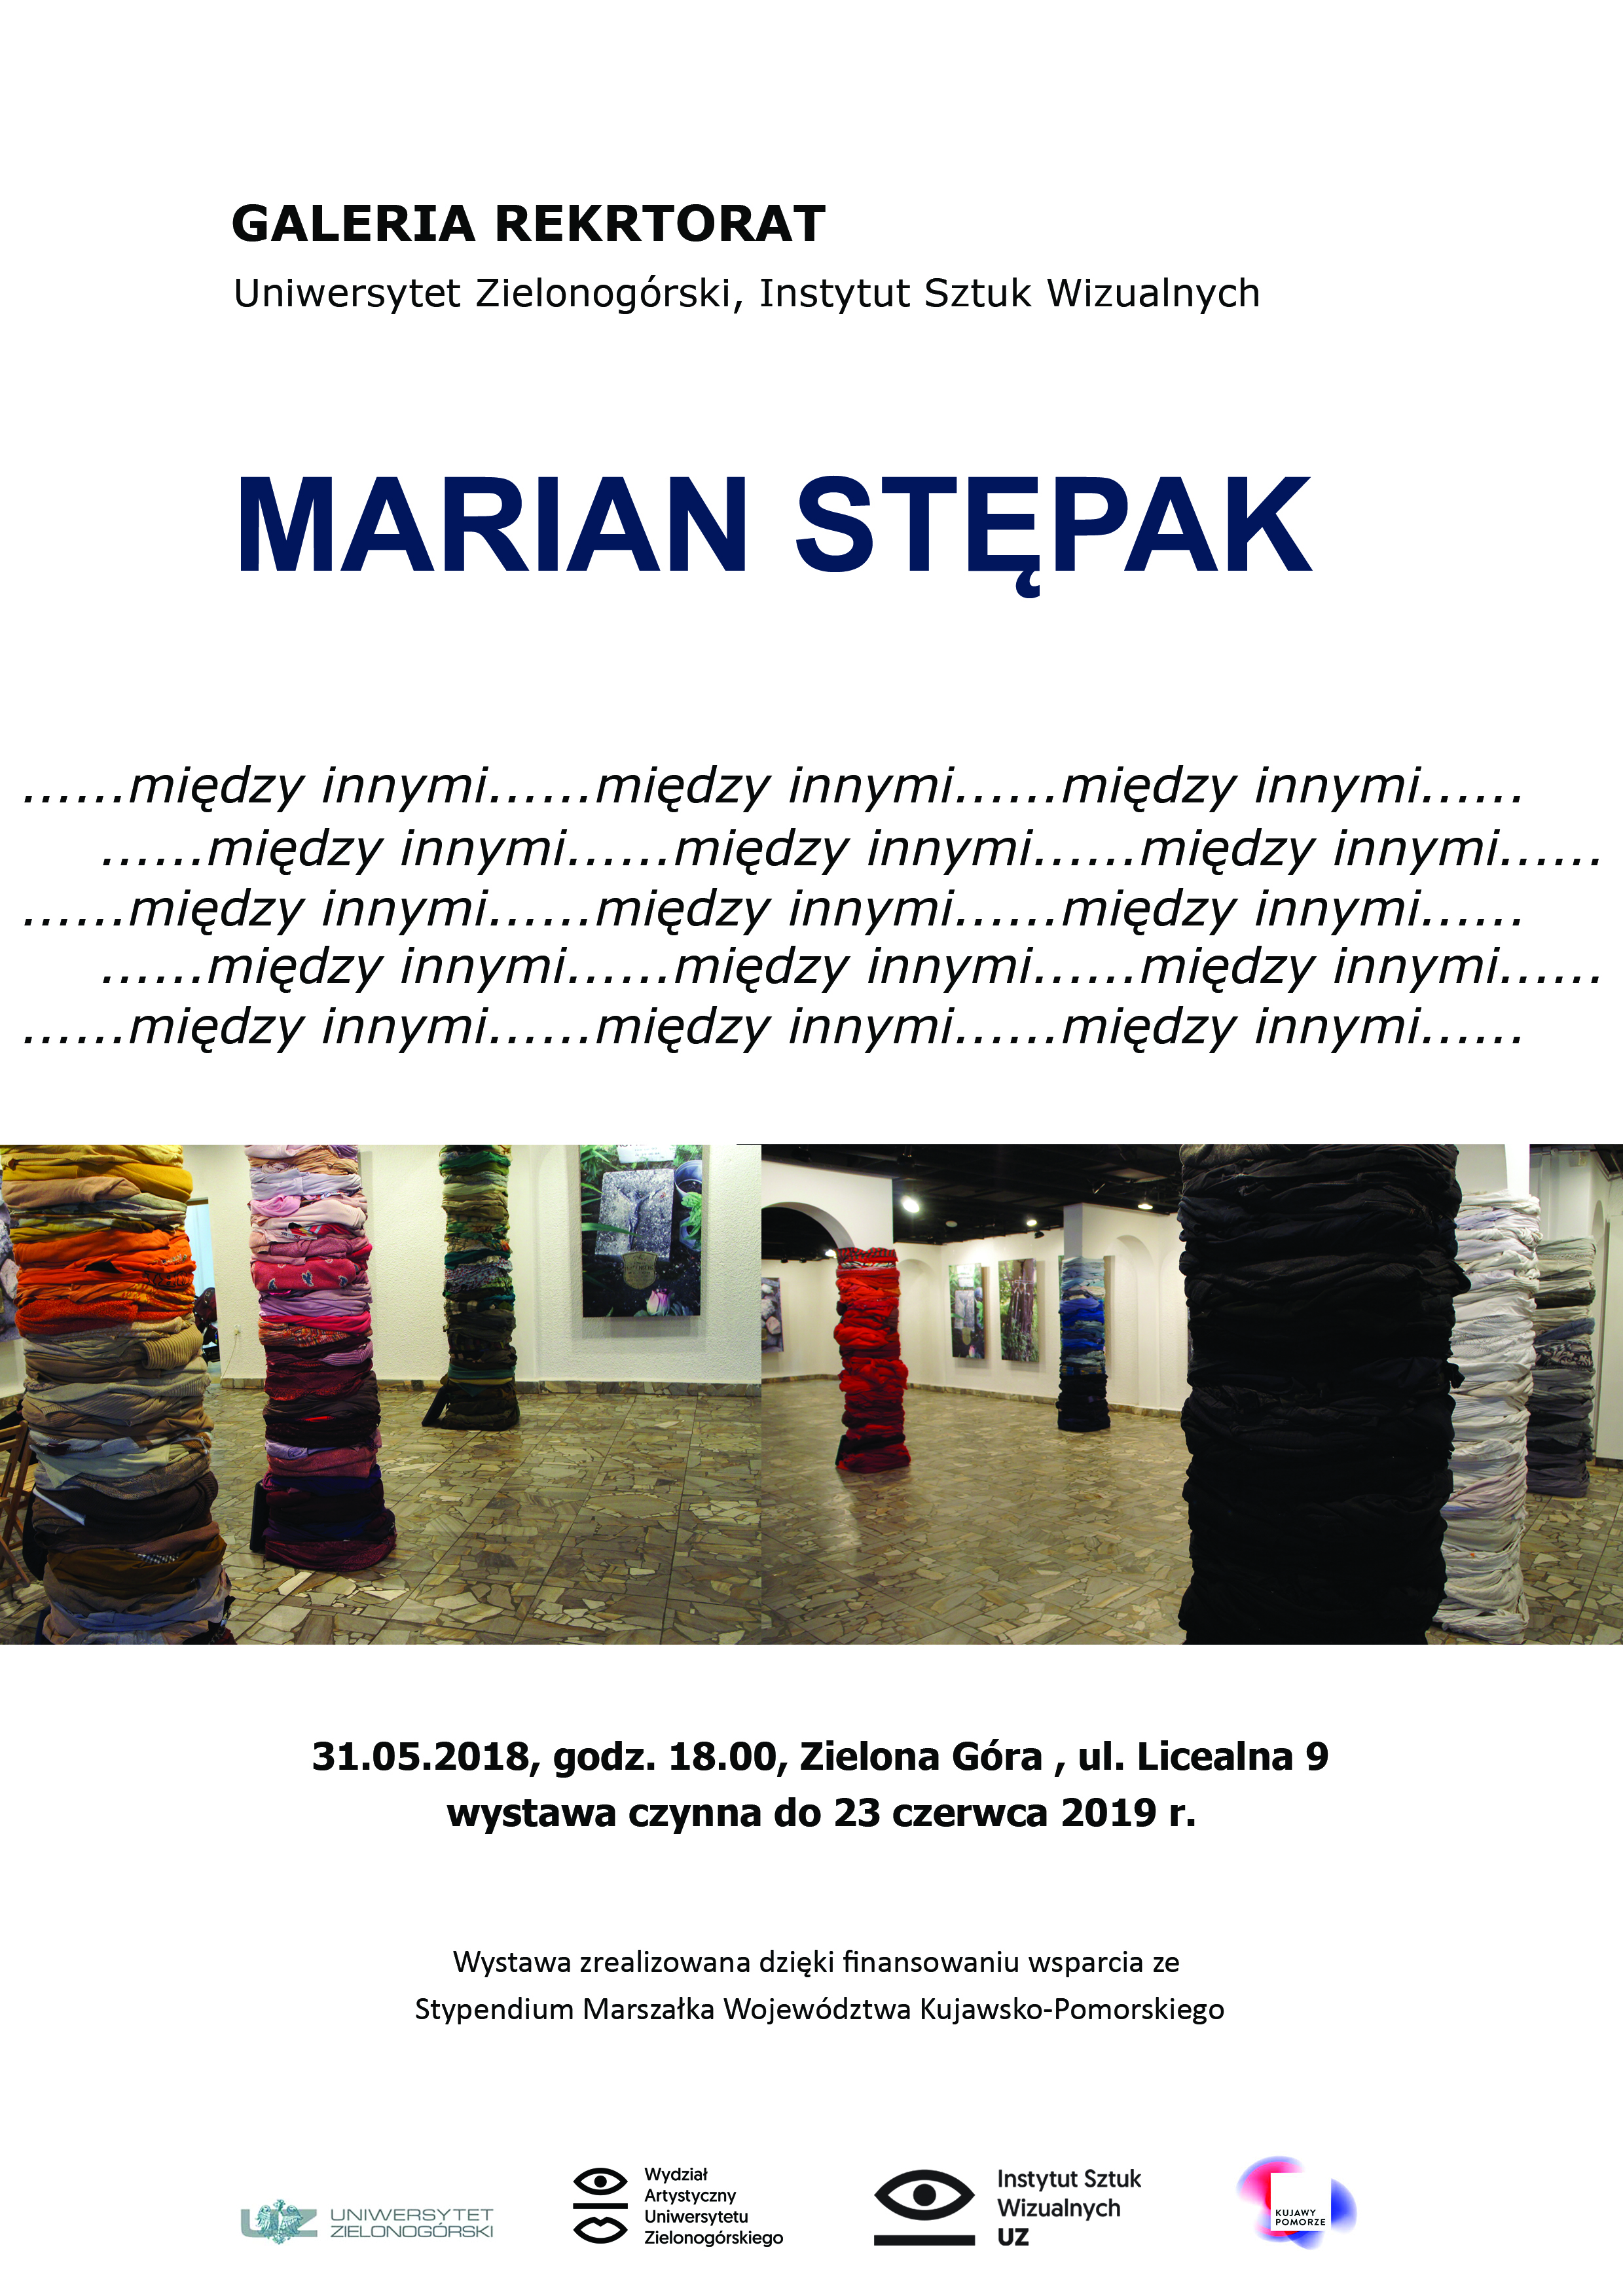 Marian Stępak, Galeria Rektorat, Zielona Góra